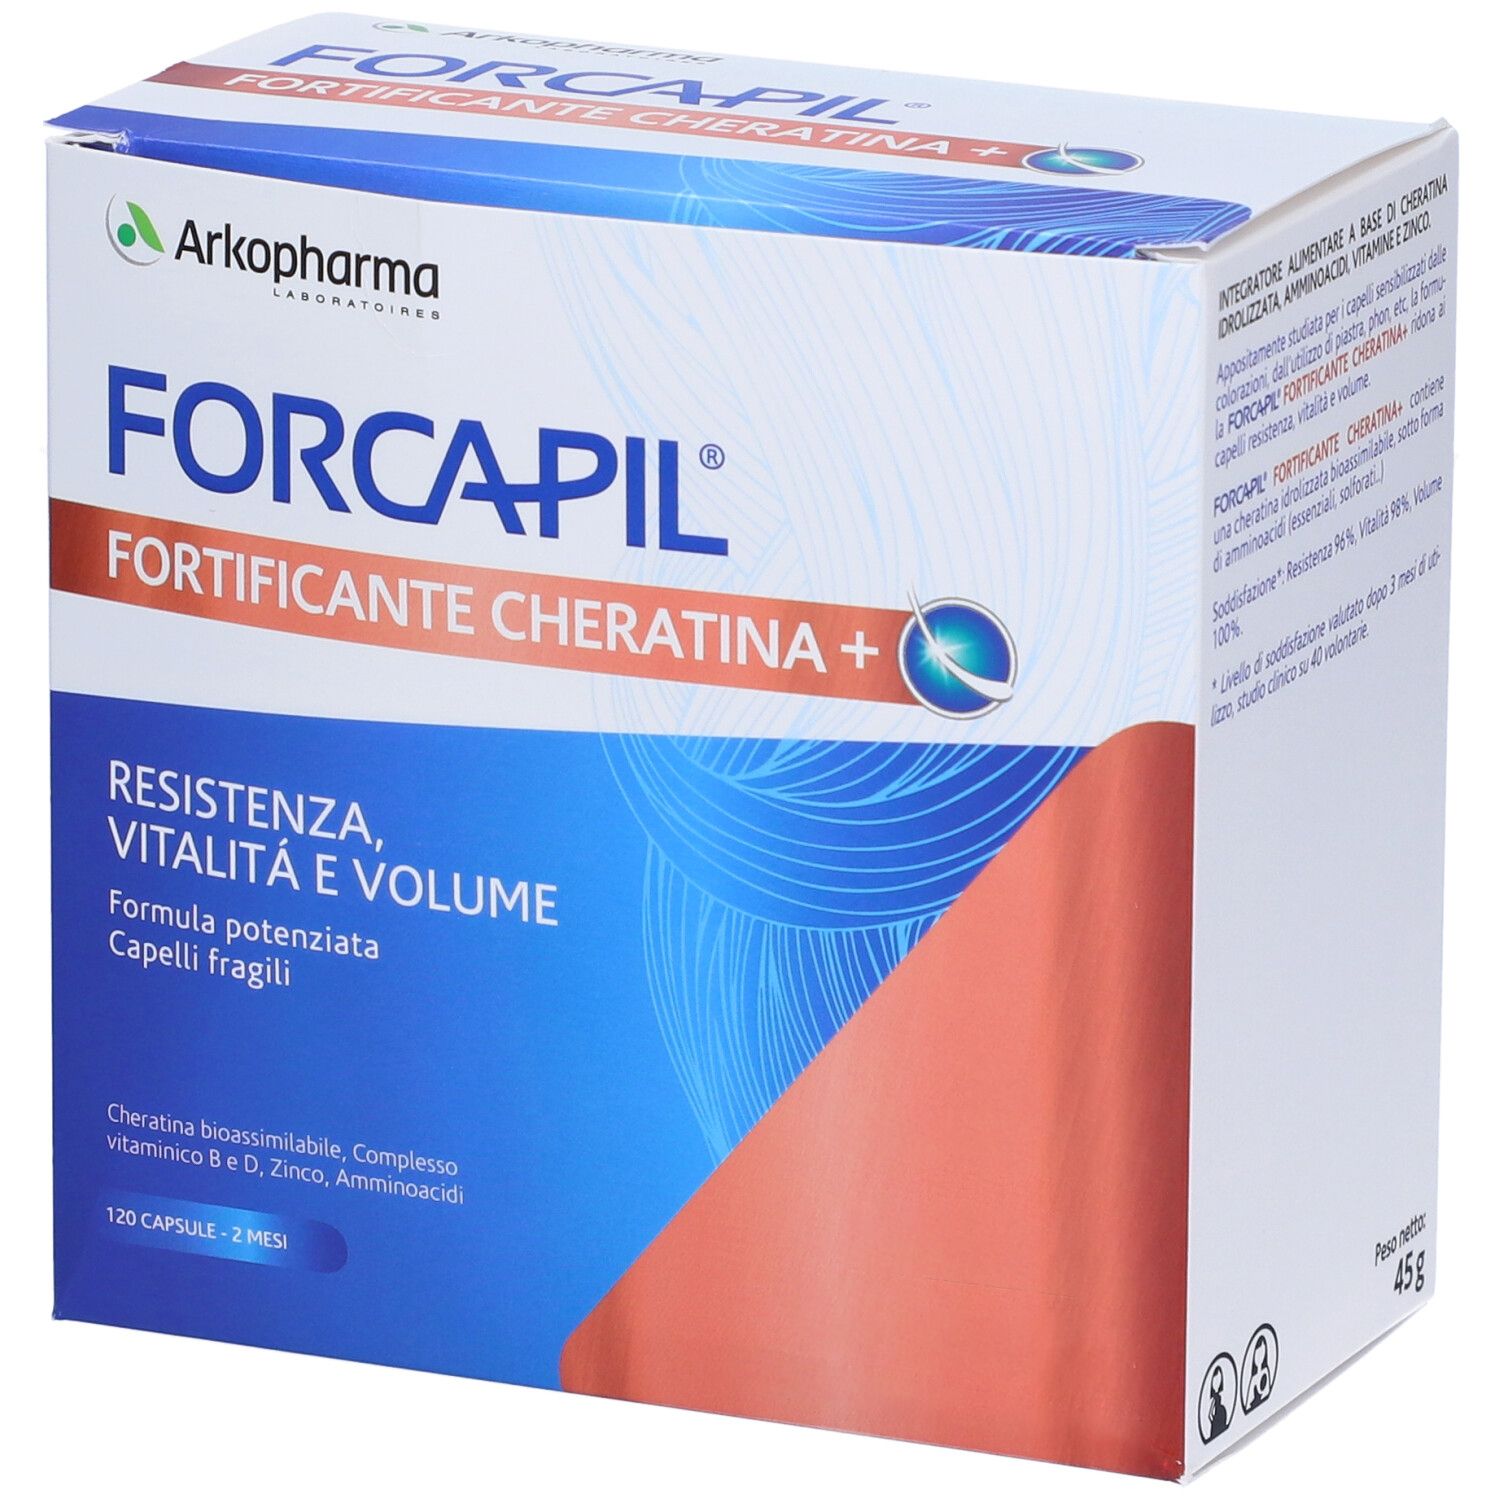 Arkopharma Forcapil® Foritificante Cheratina+